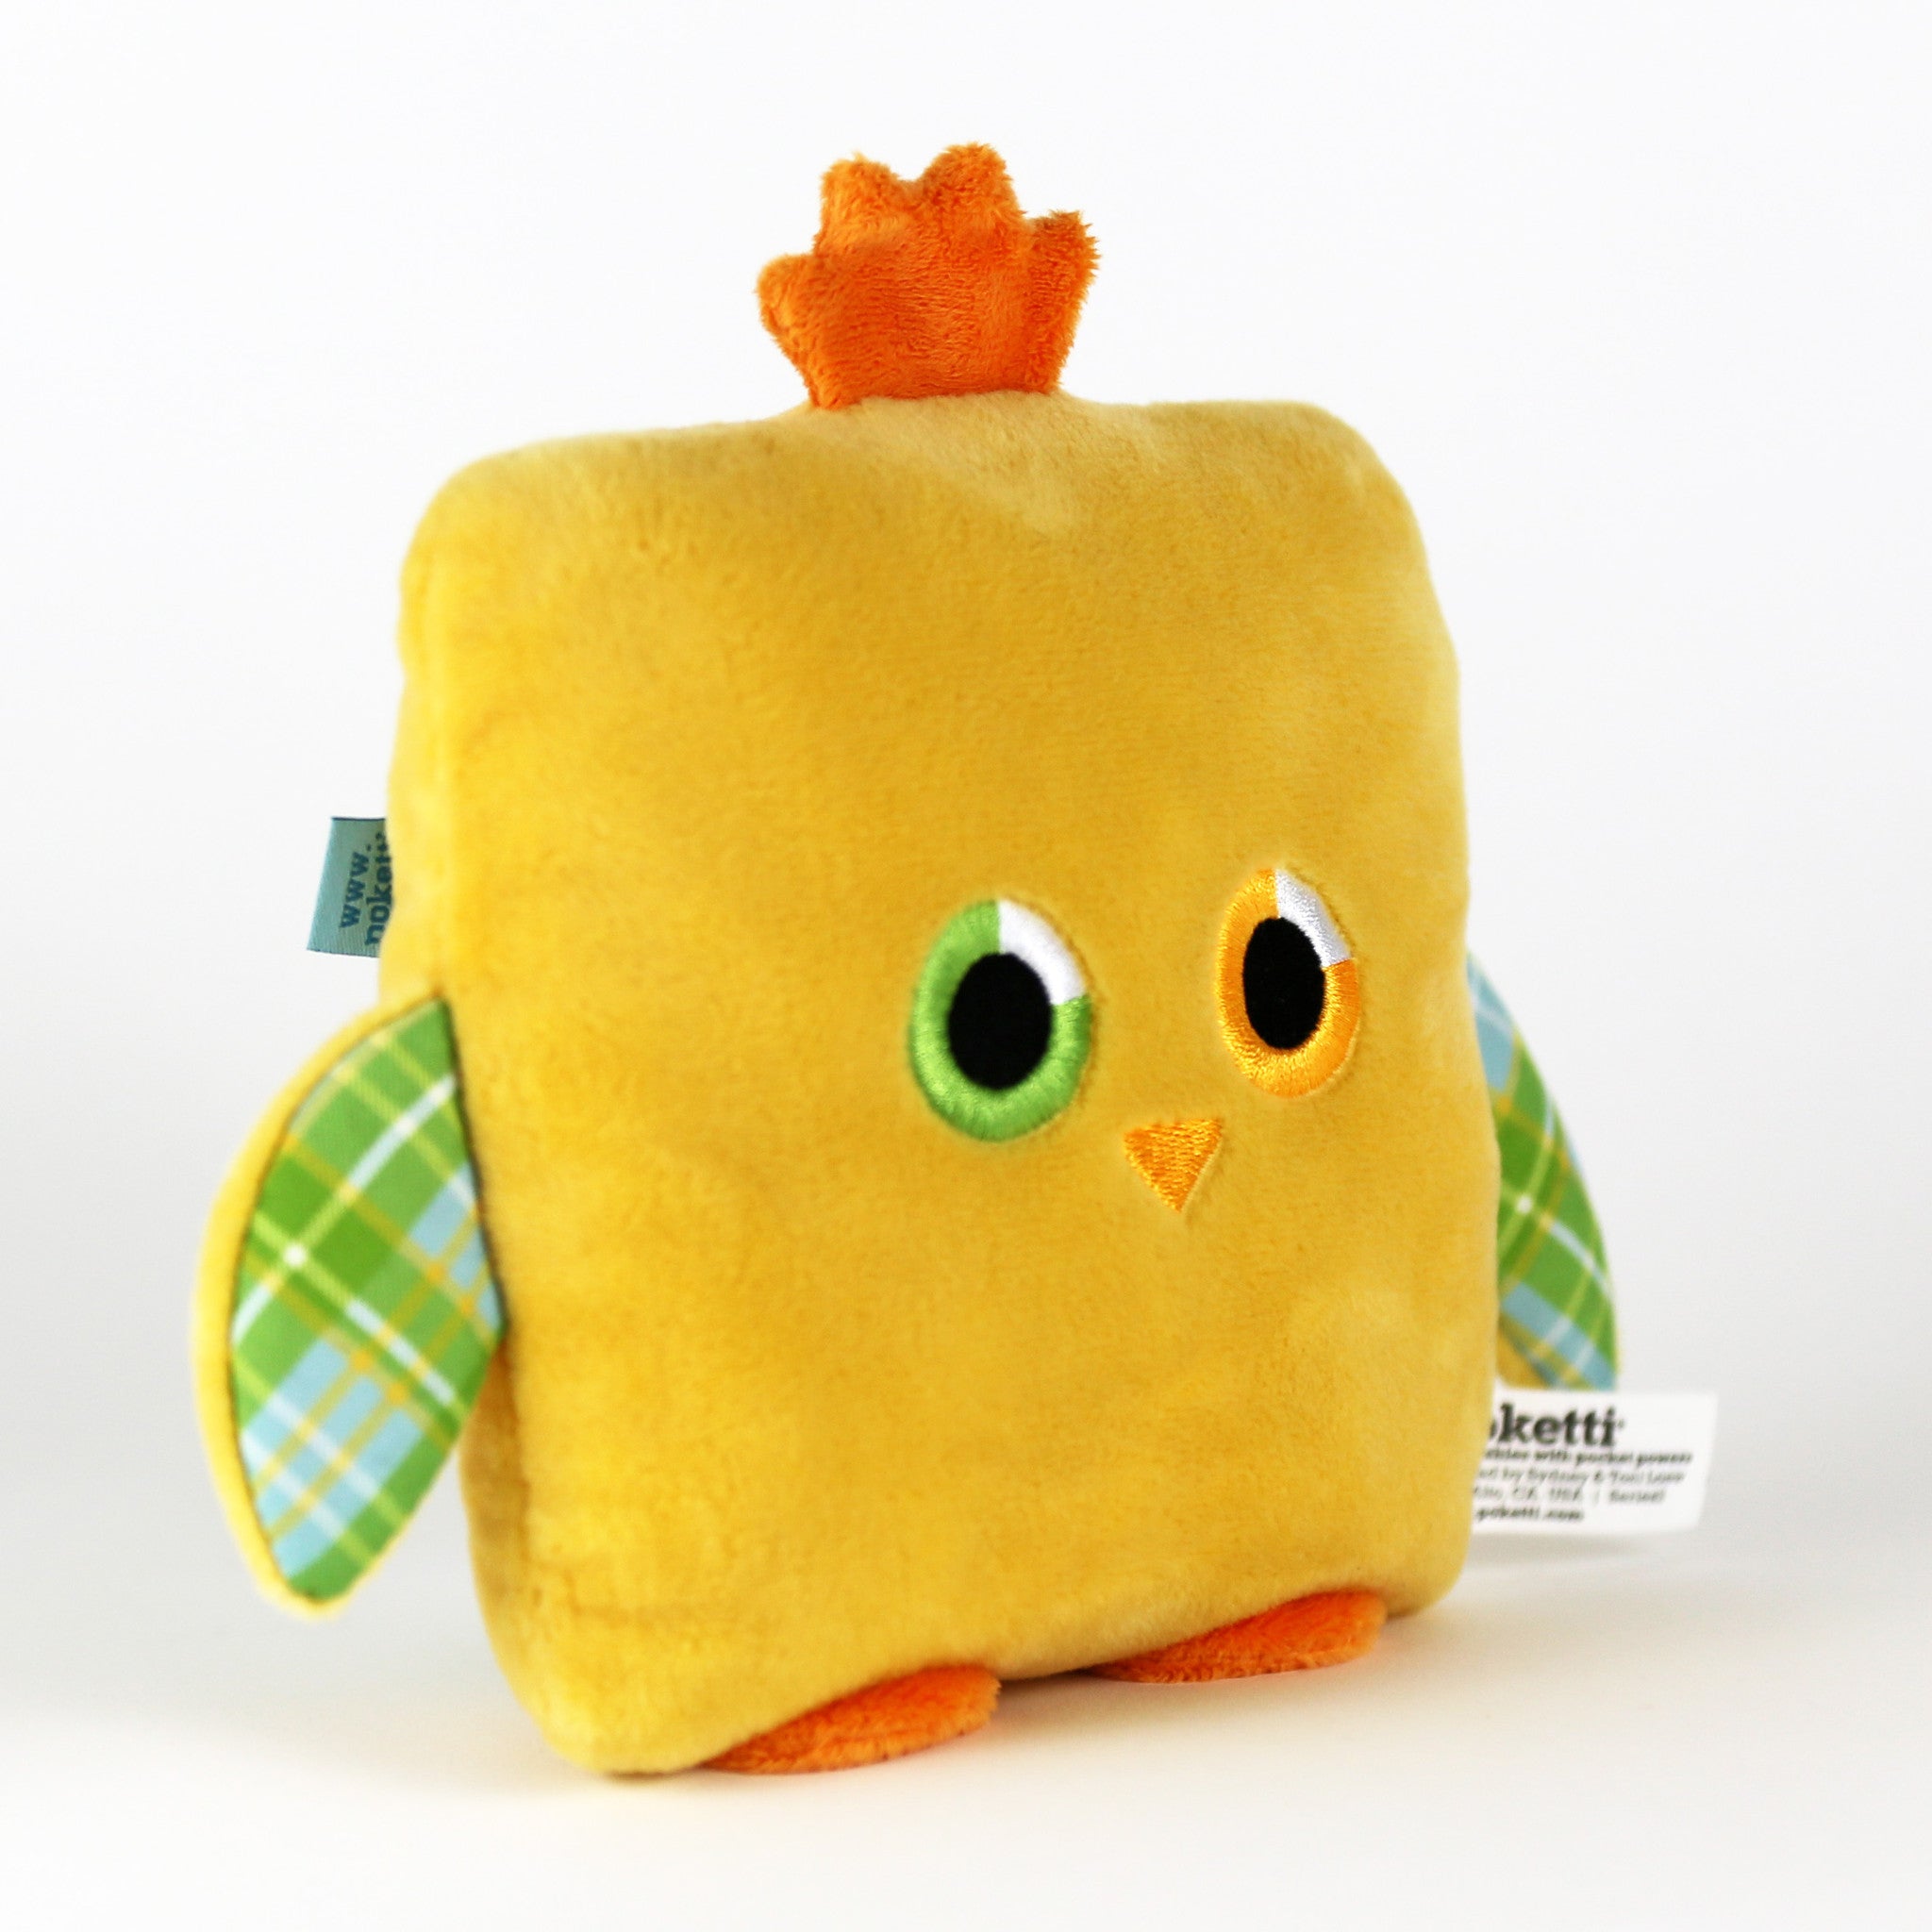 Plush toy chick stuffed animal bird with a useful back pocket